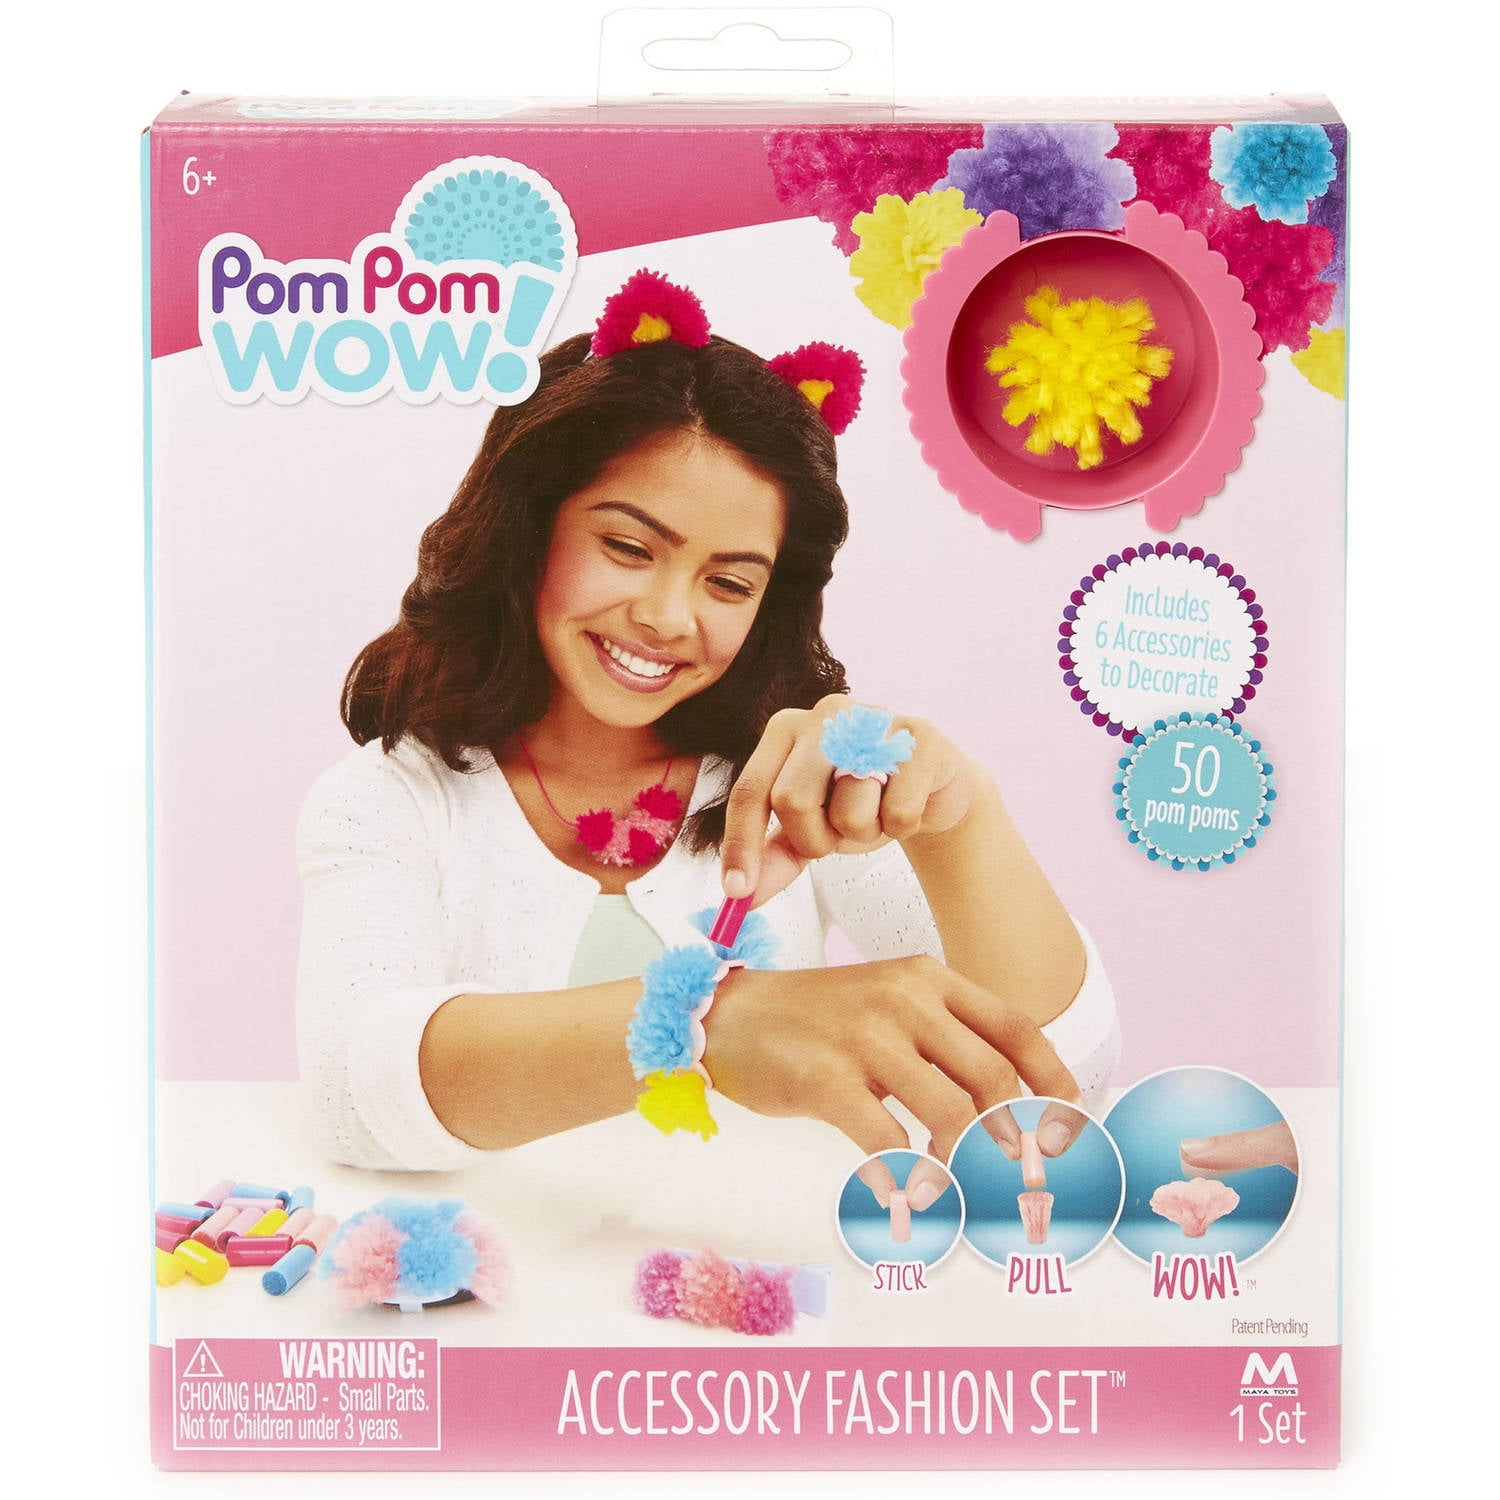 Pom Pom Create & Decorate Accessory Fashion Set - Walmart.com